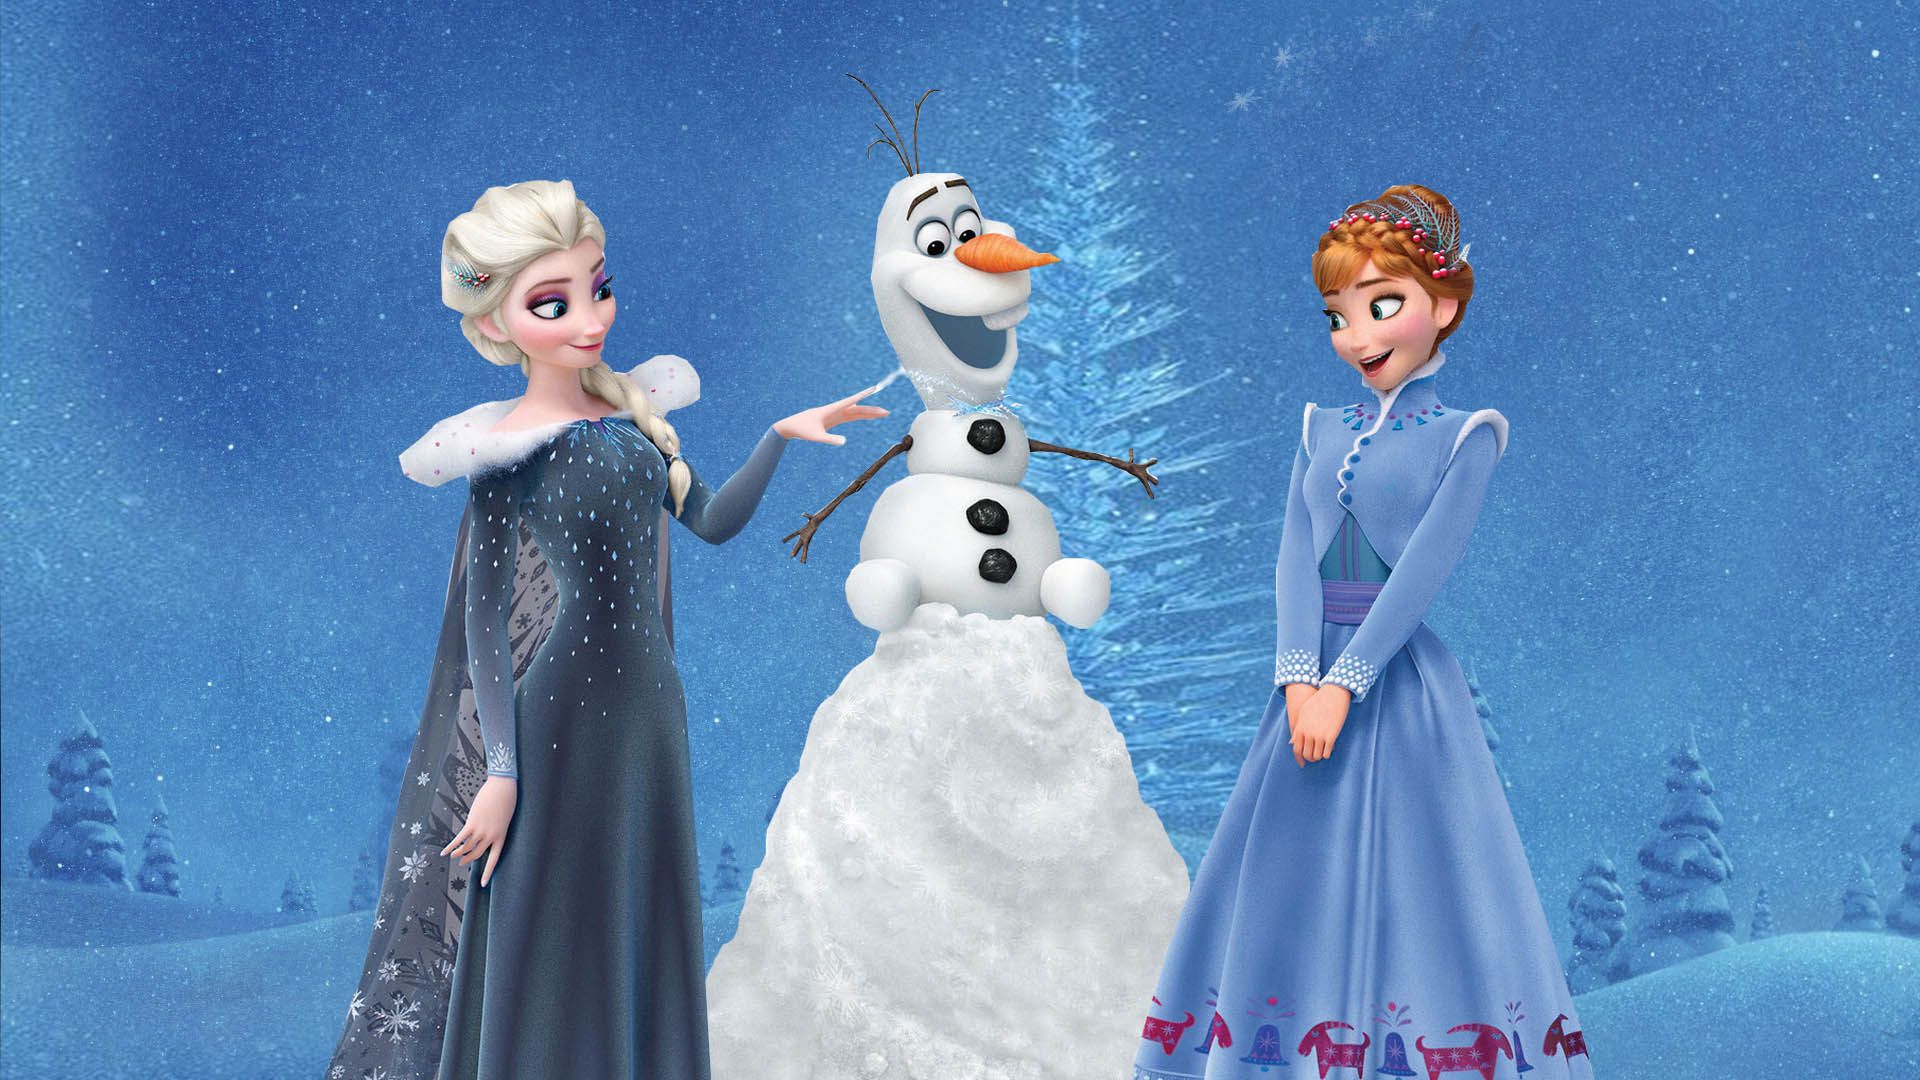 Frozen Elsa And Anna Wallpapers Wallpaper Cave 